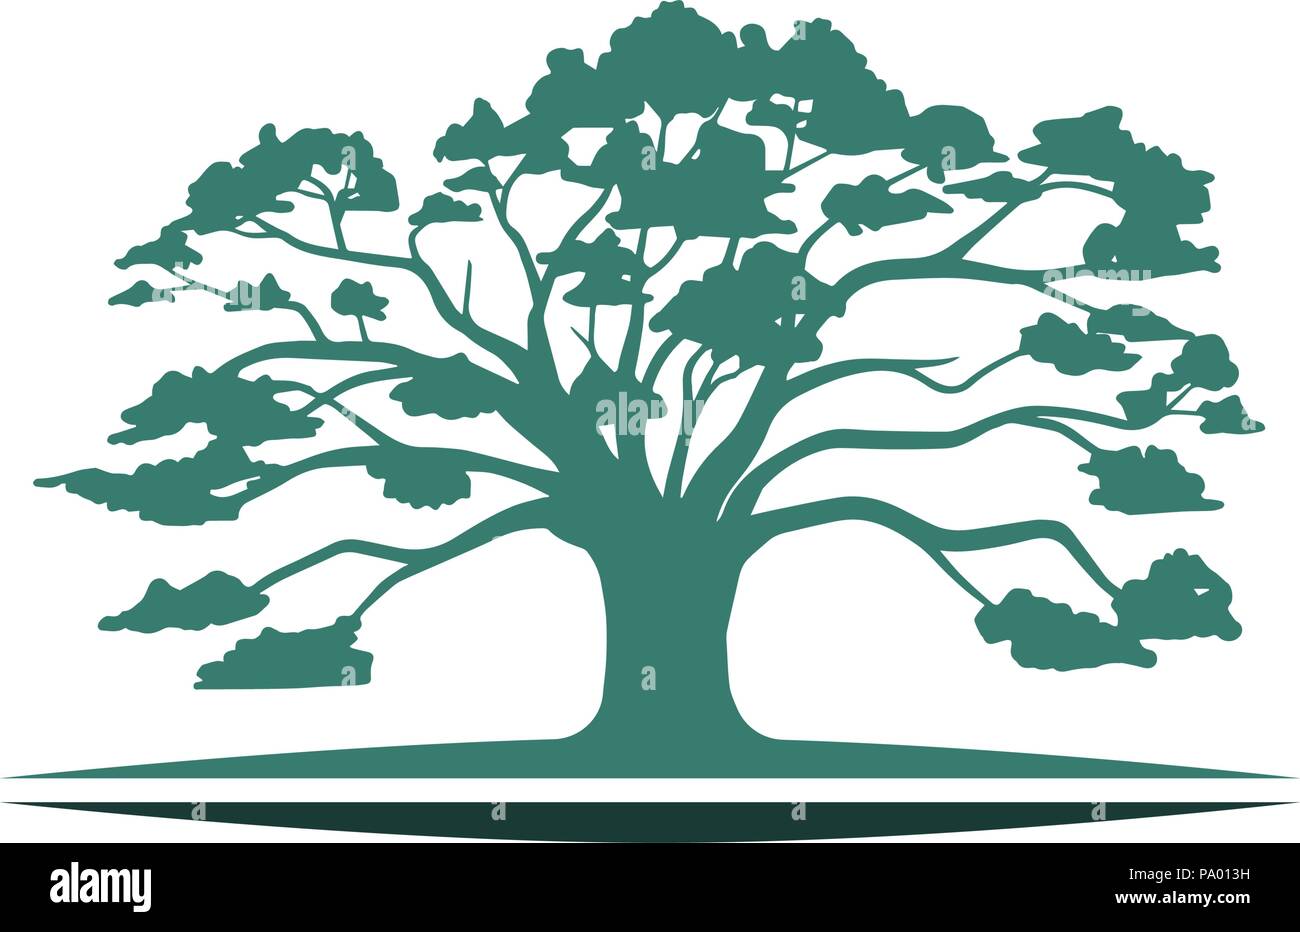 Big Oak Tree Ecology Environmental Nature Symbol Stock Vector